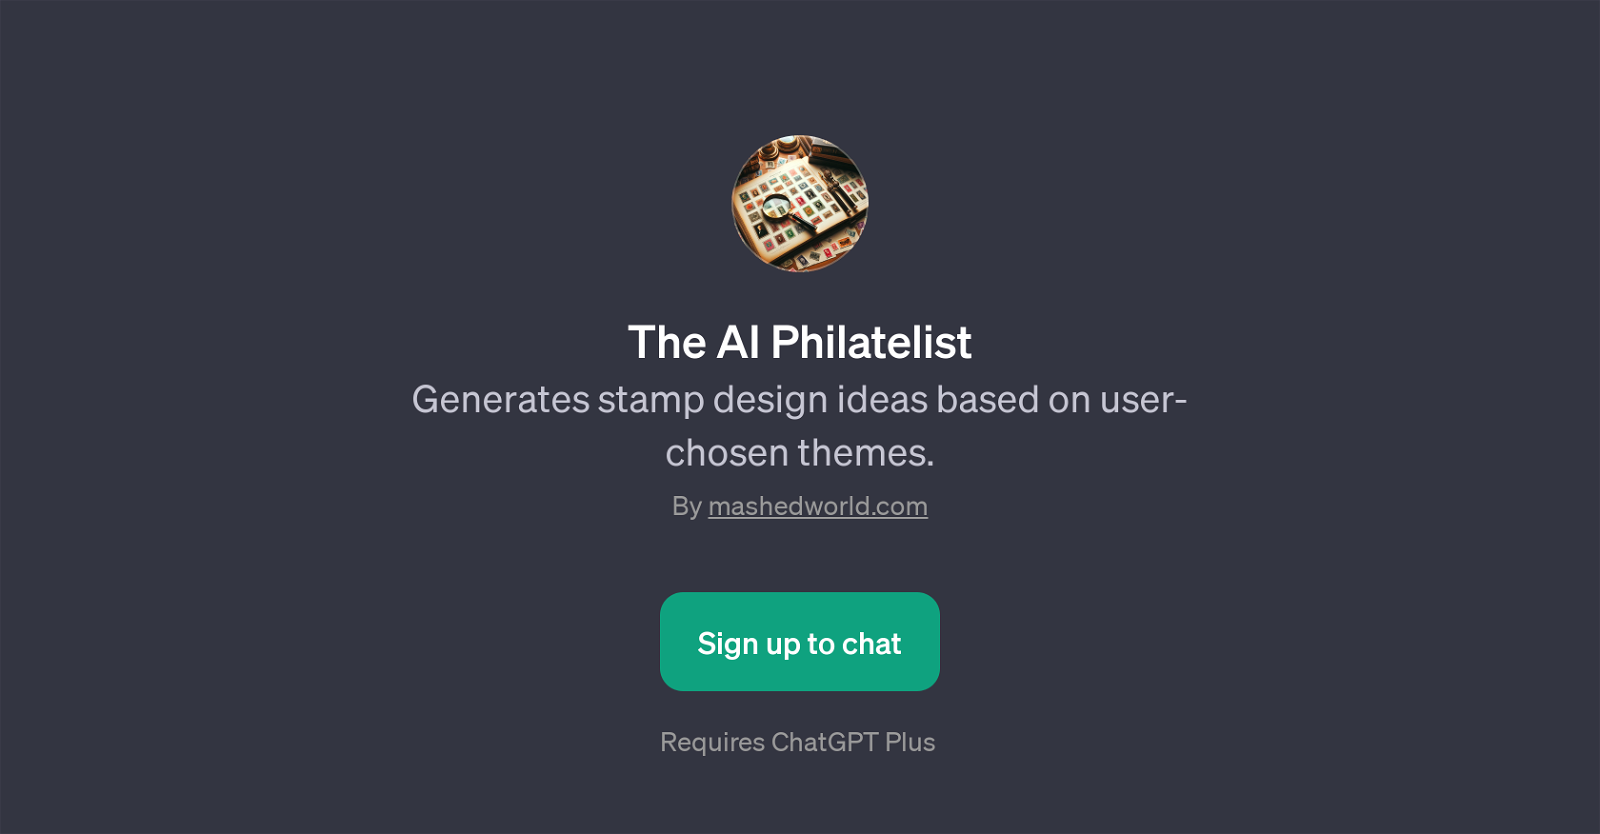 The AI Philatelist website